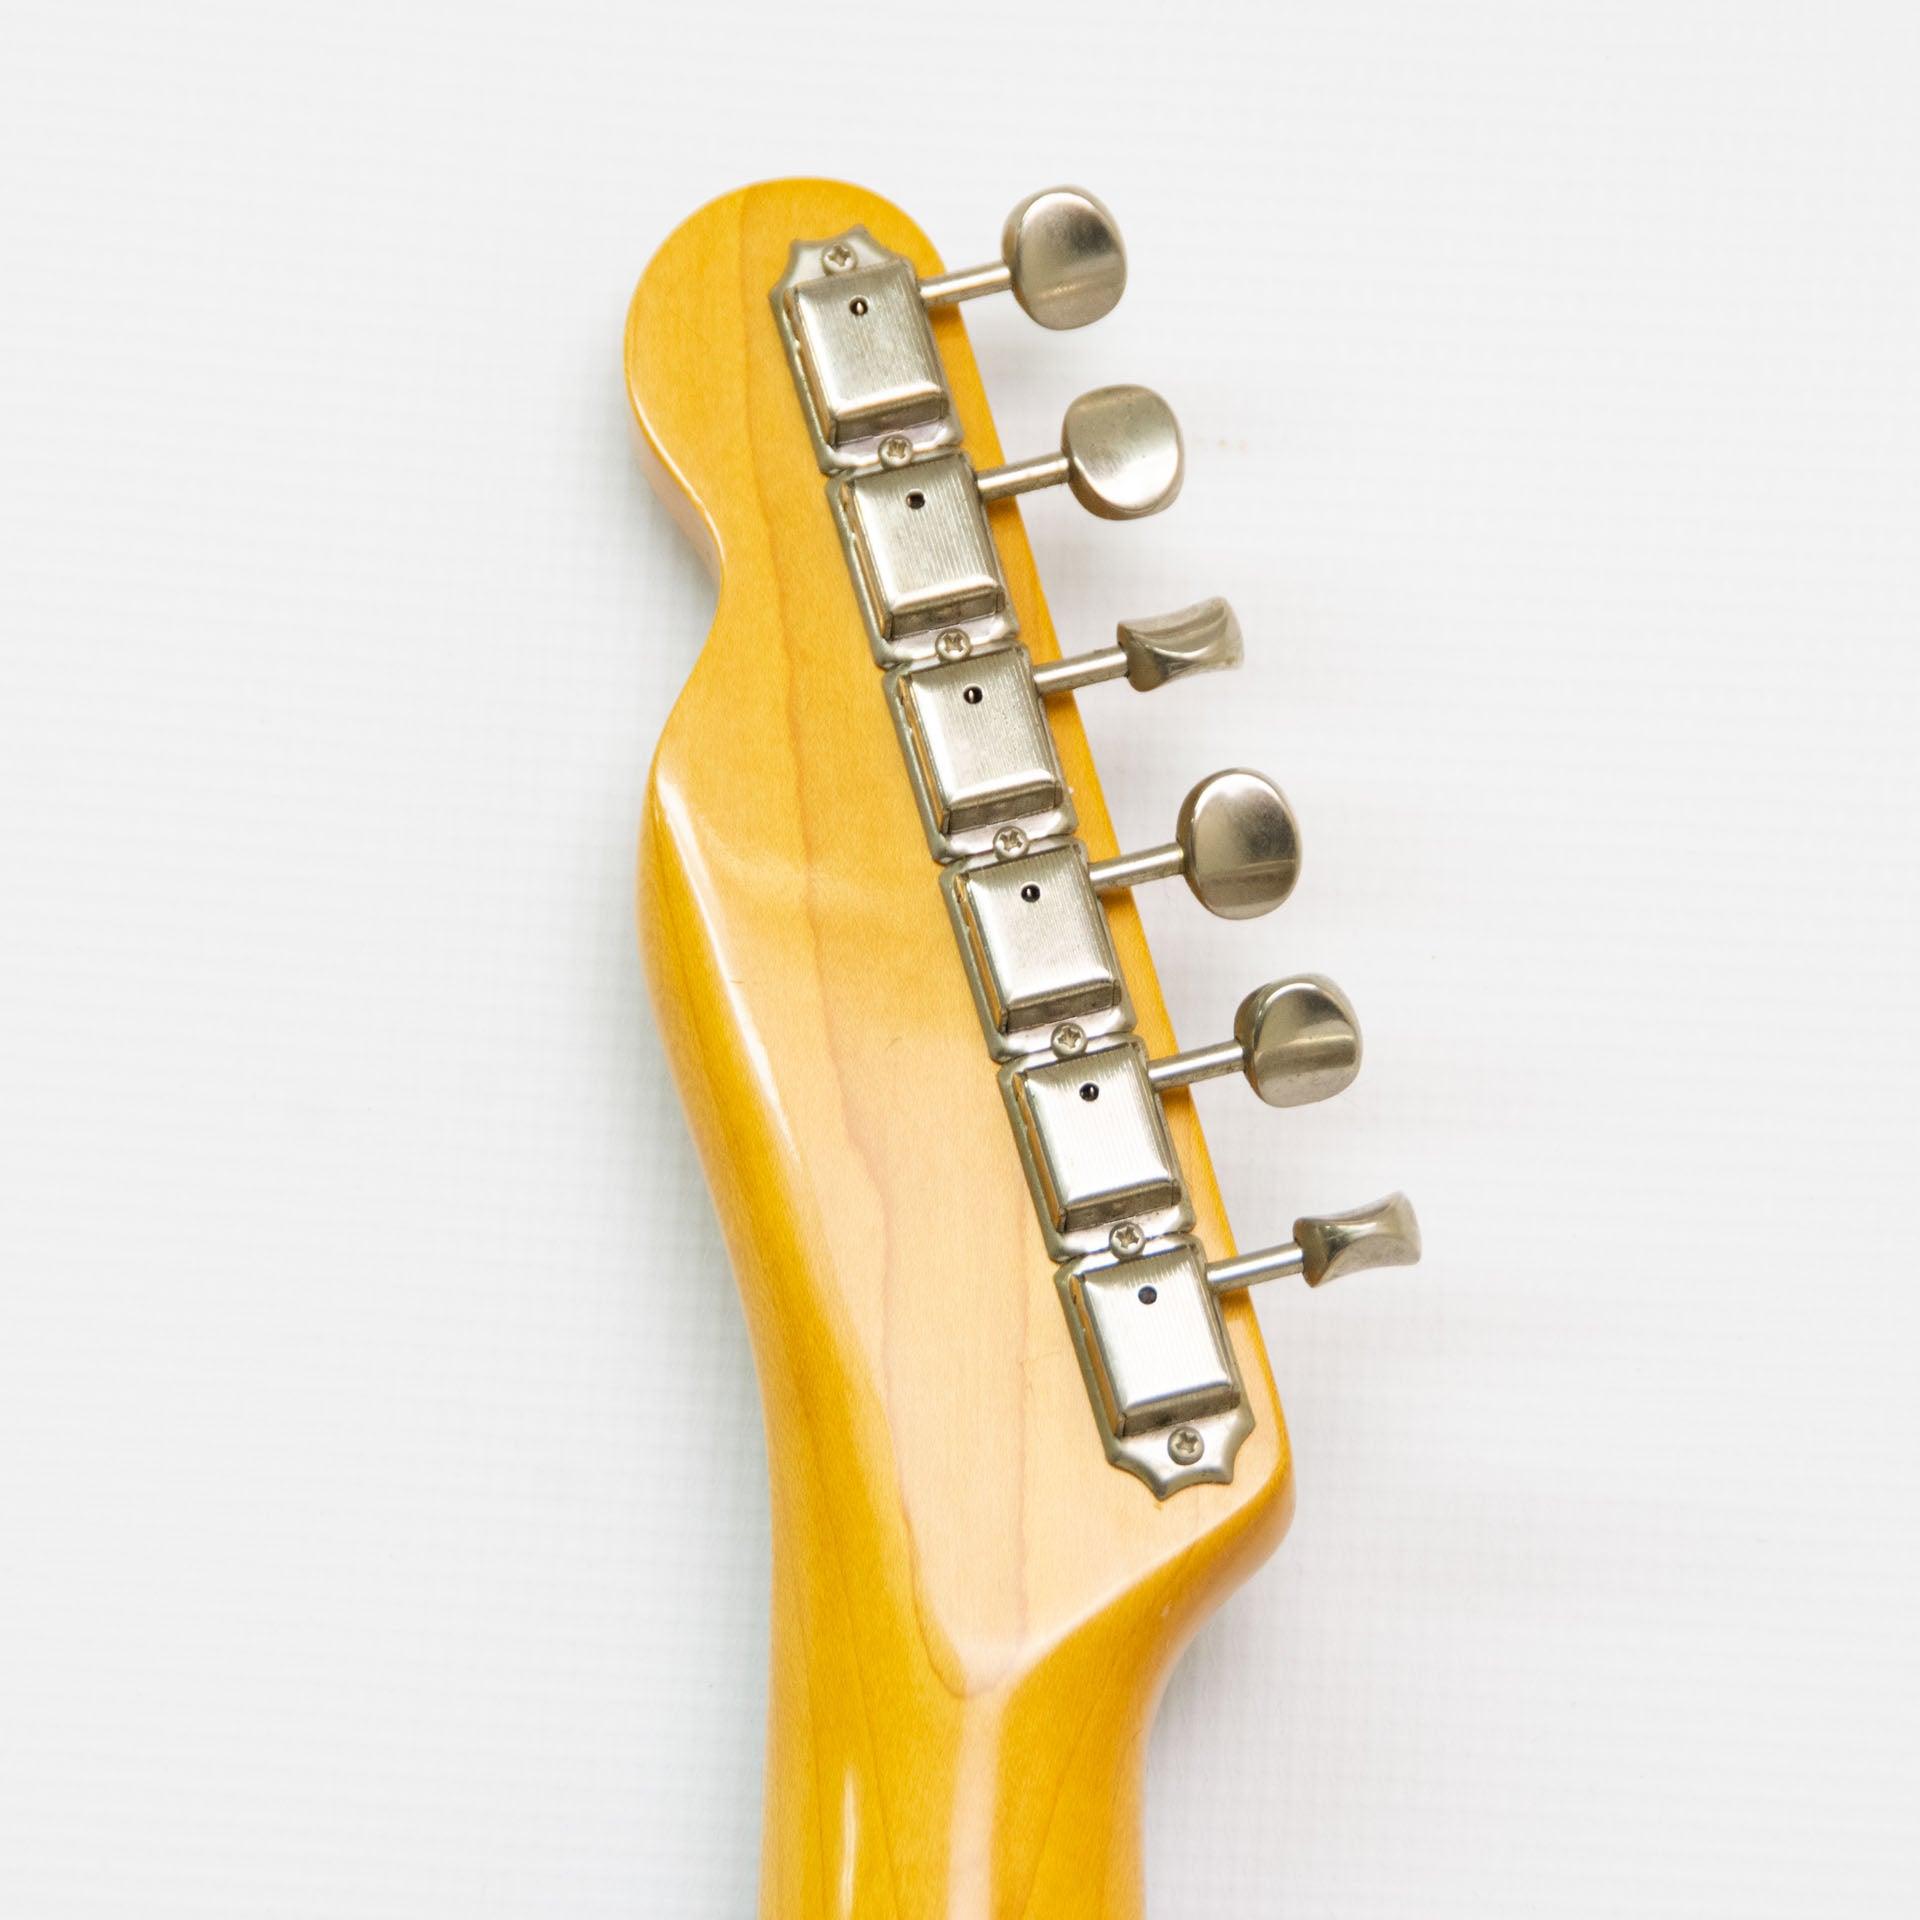 Fender Telecaster Sunburst - Año 85-86 MIJ - ipawnishop.com